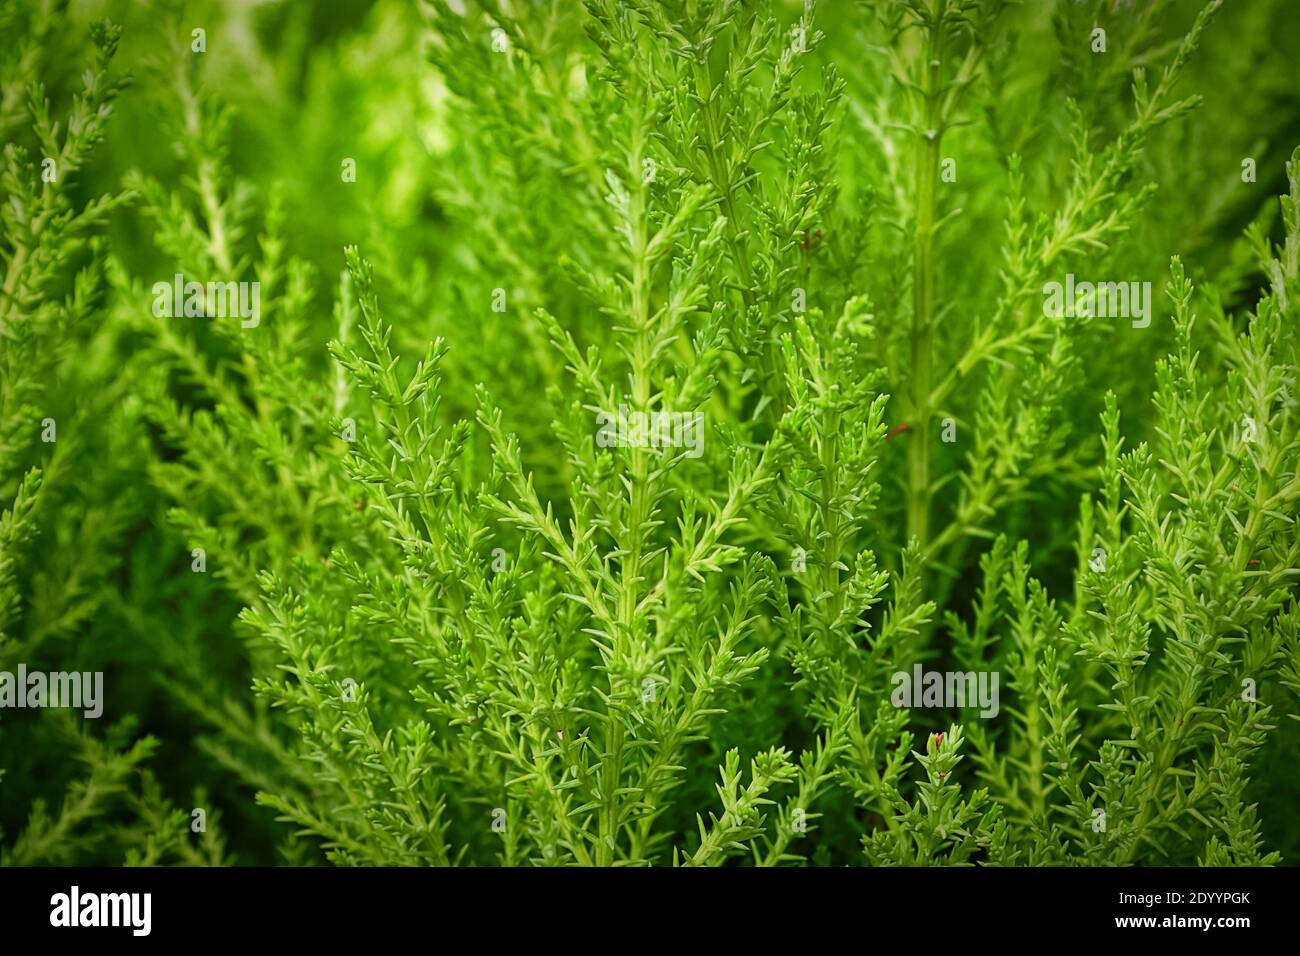 Backgrounds of tiny green needles on a lemon cypress tree. Stock Photo